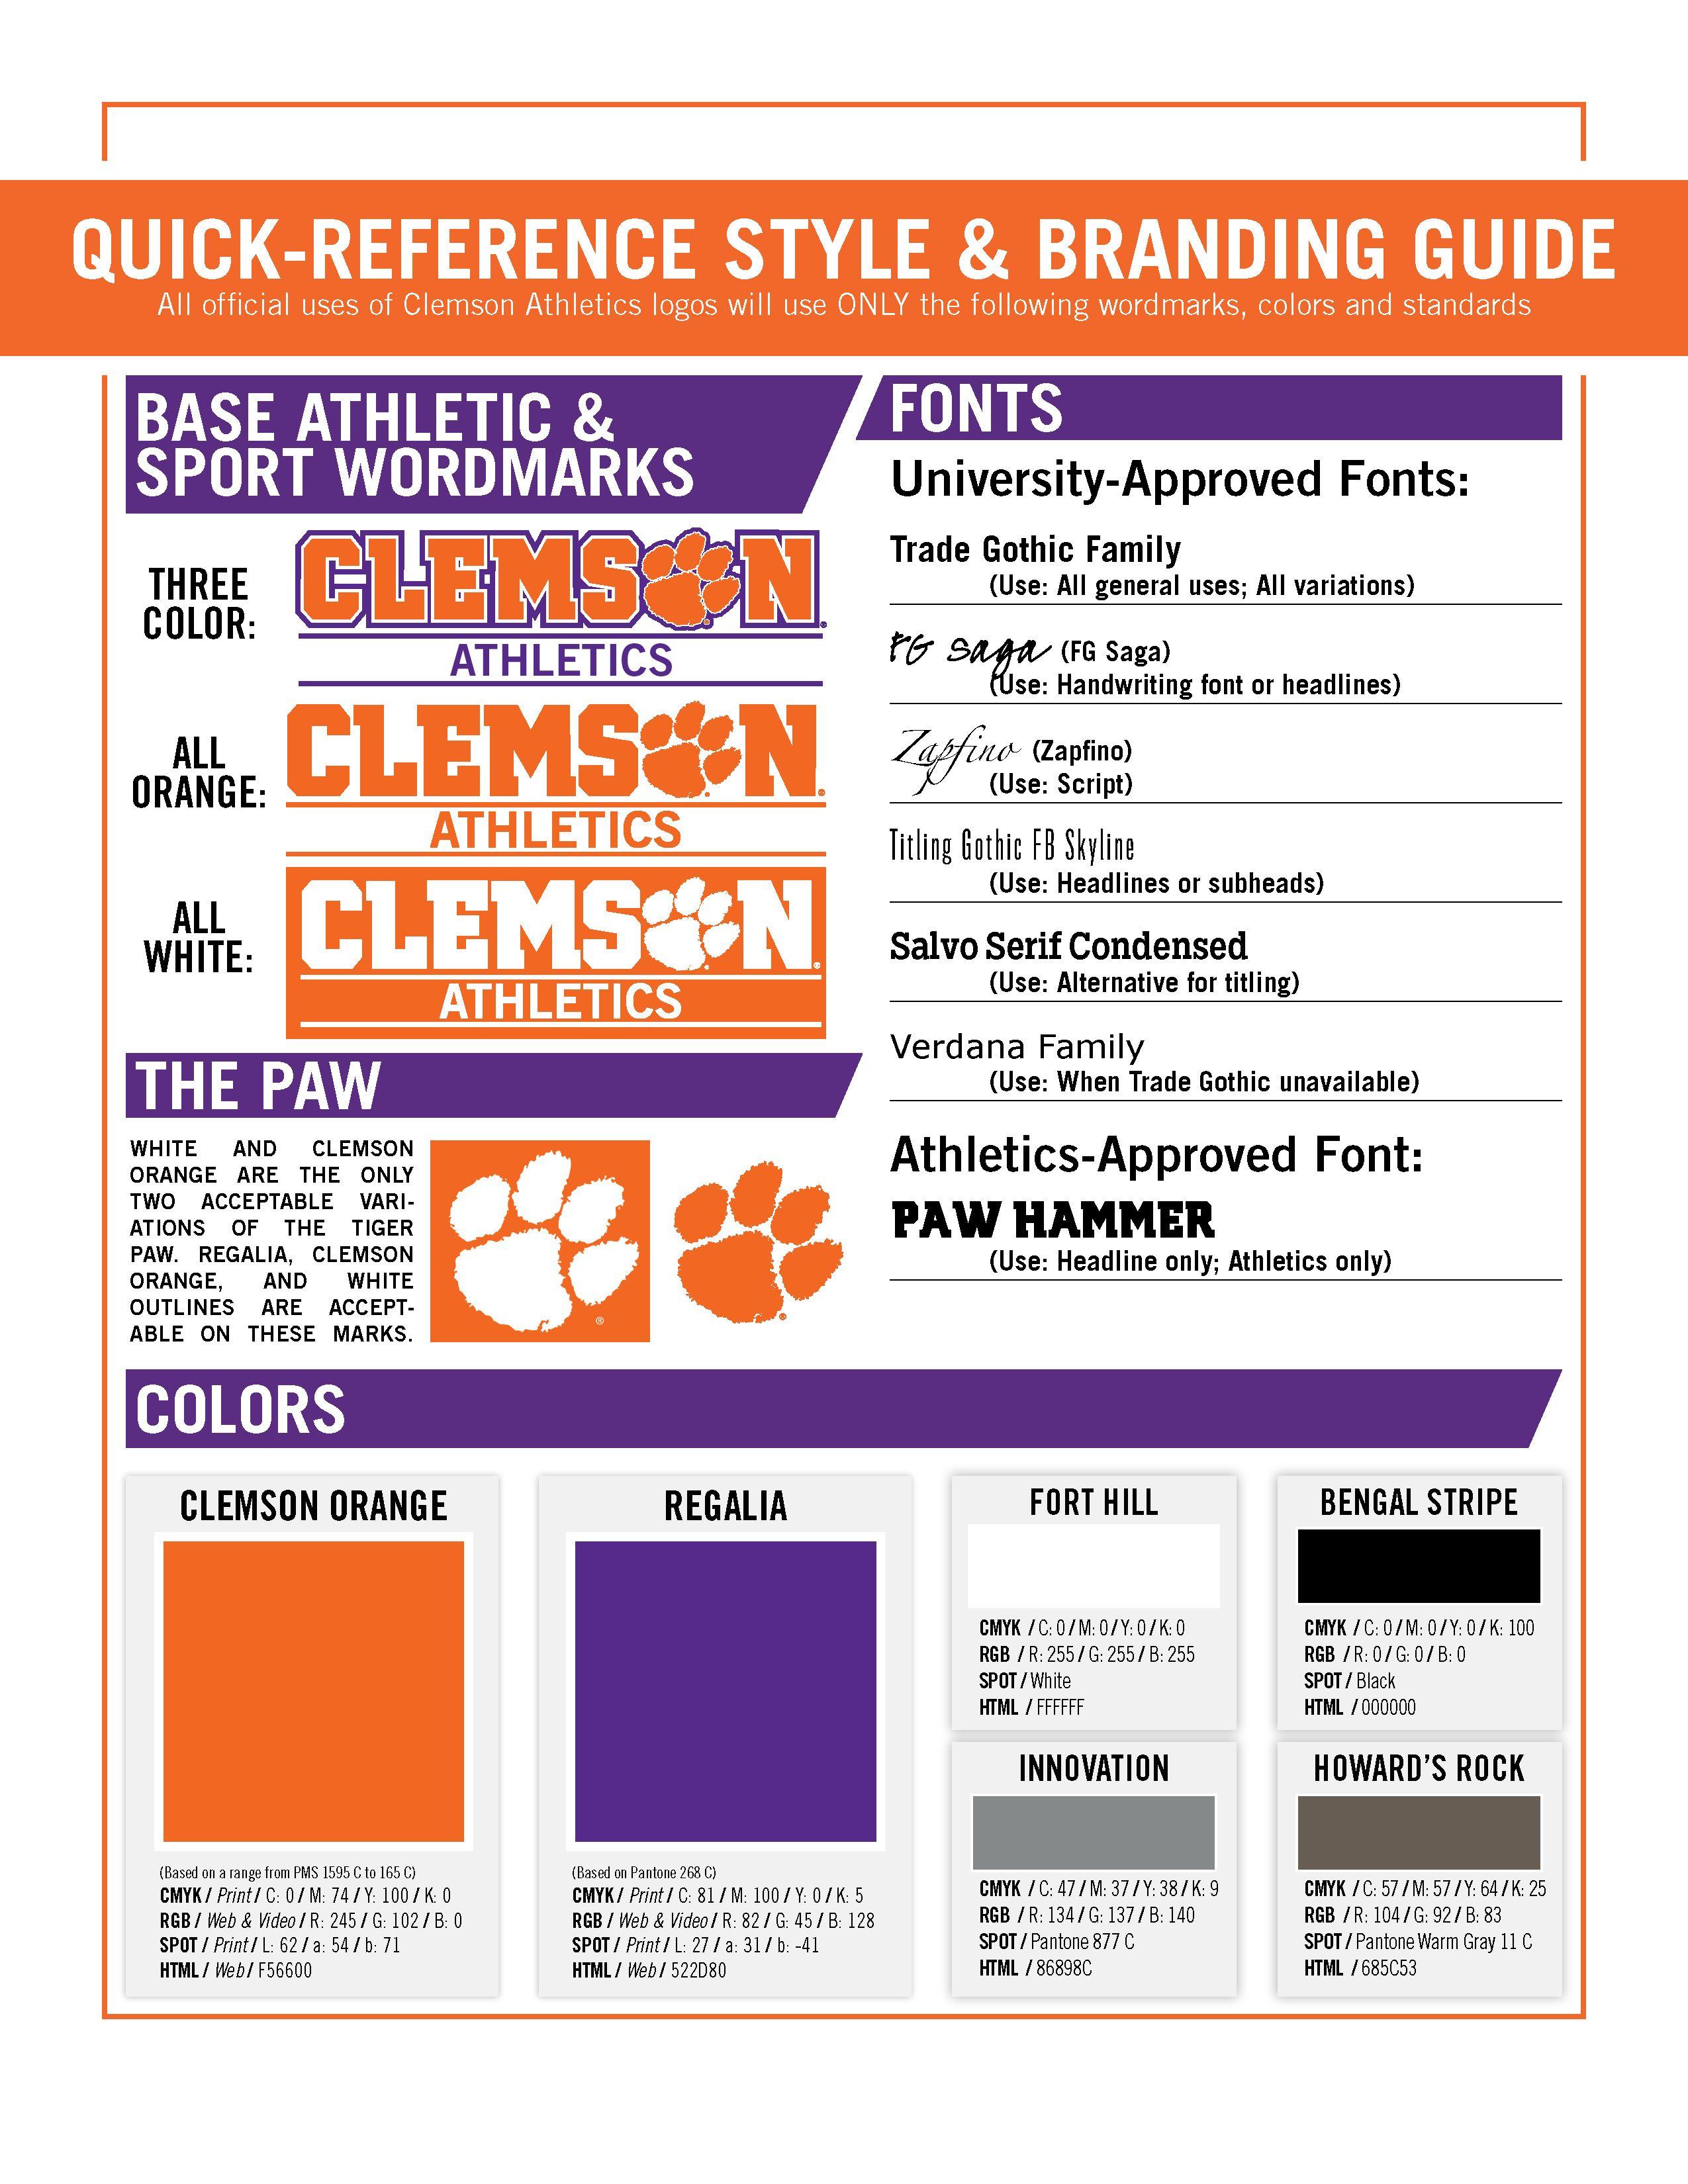 Clemson C Logo - Clemson Athletics Style Guide